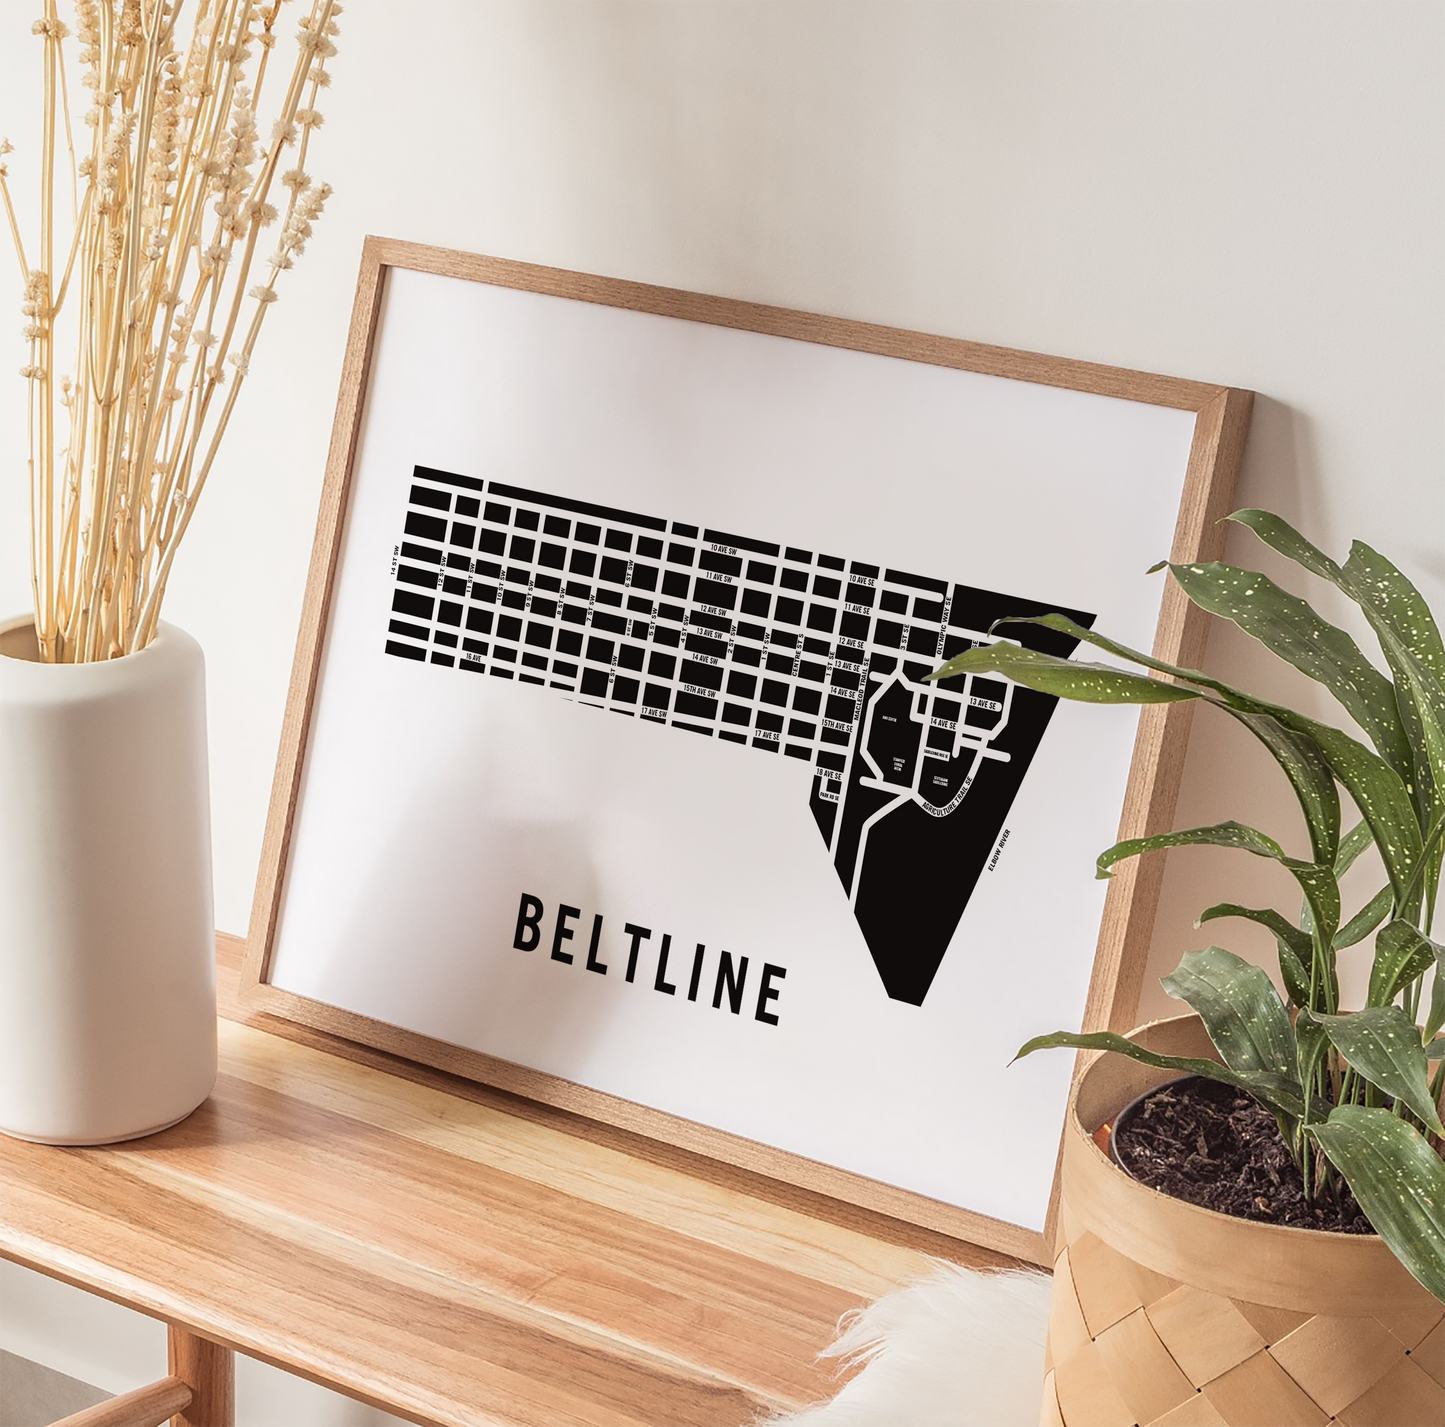 Beltline Map, Calgary